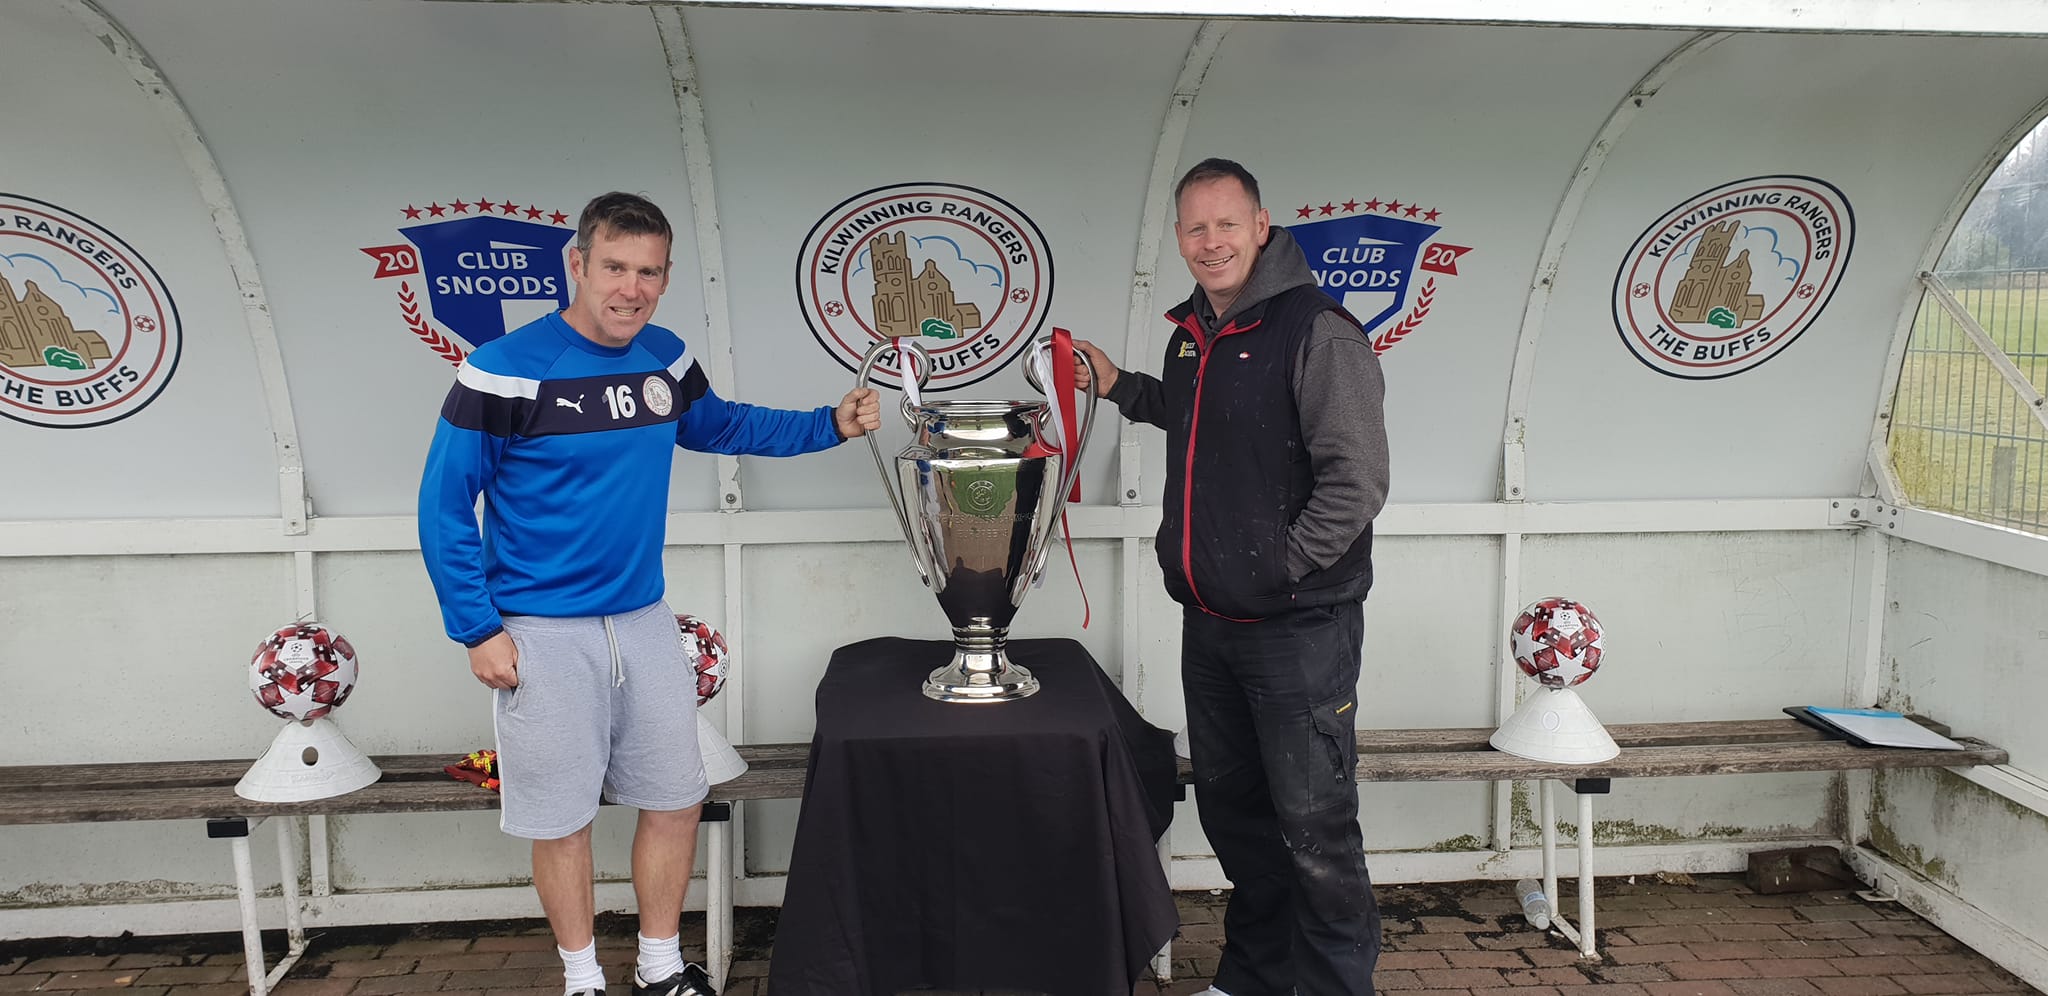 Champions League trophy visits Kilwinning Sports Club